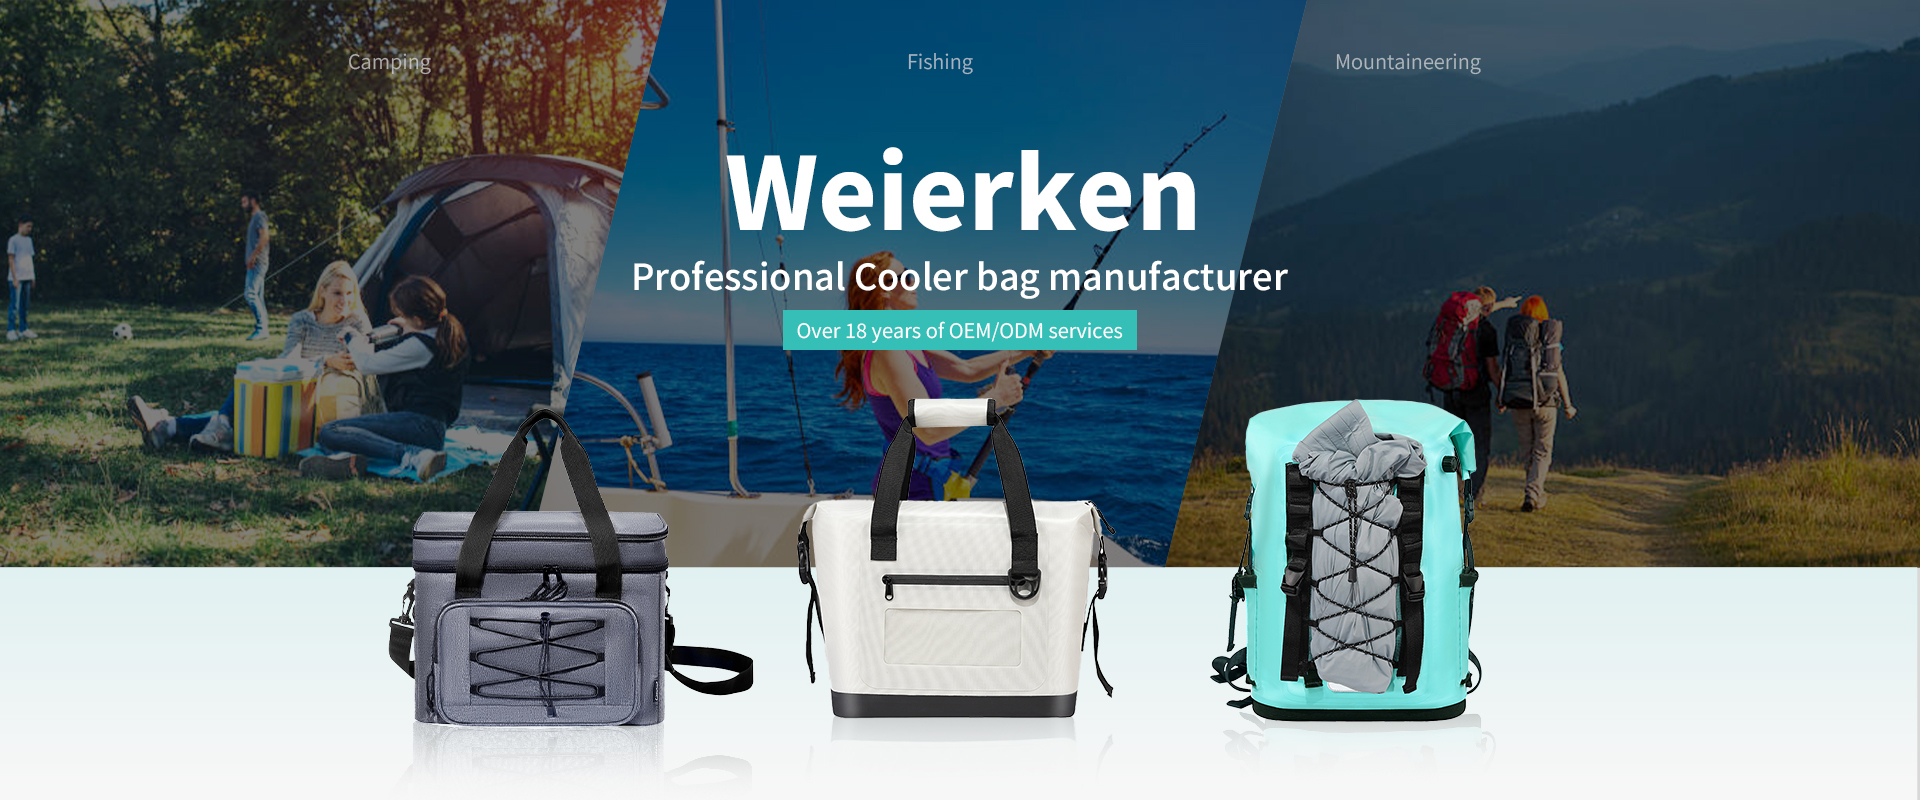 Weierken has 15 years of experience in cooler bag manufacturing.